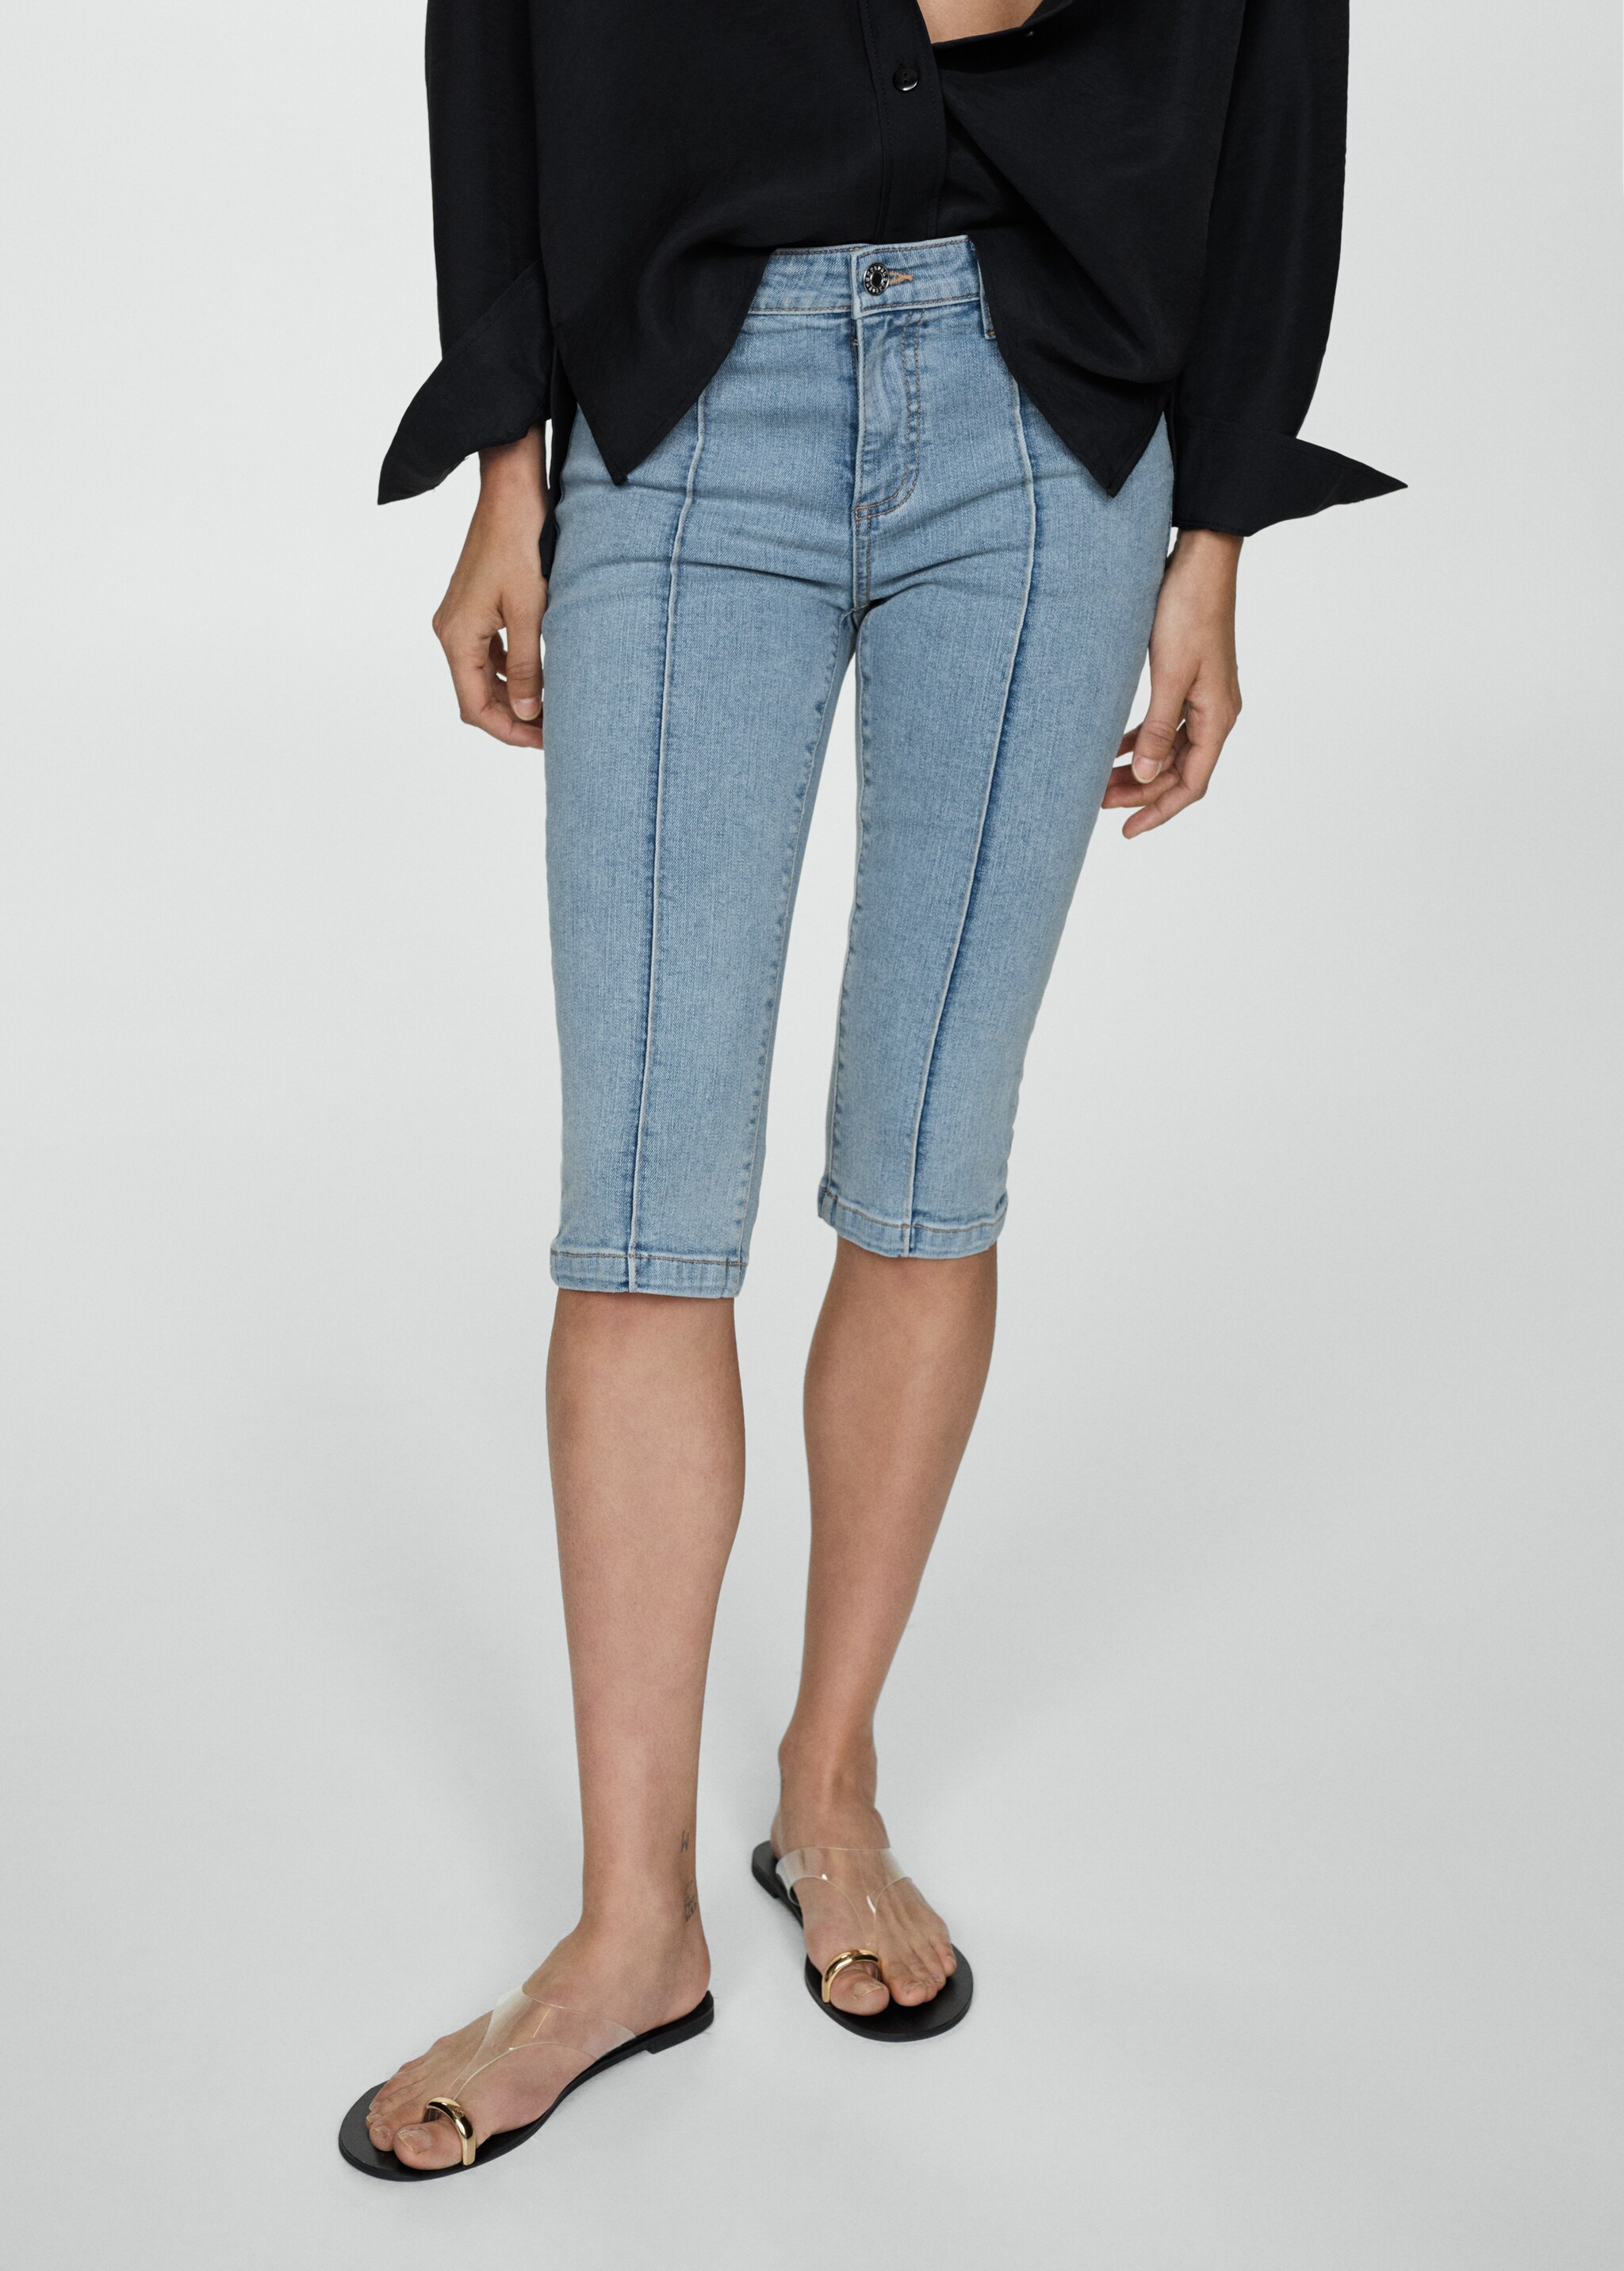 Slim capri jeans with decorative stitching - Medium plane